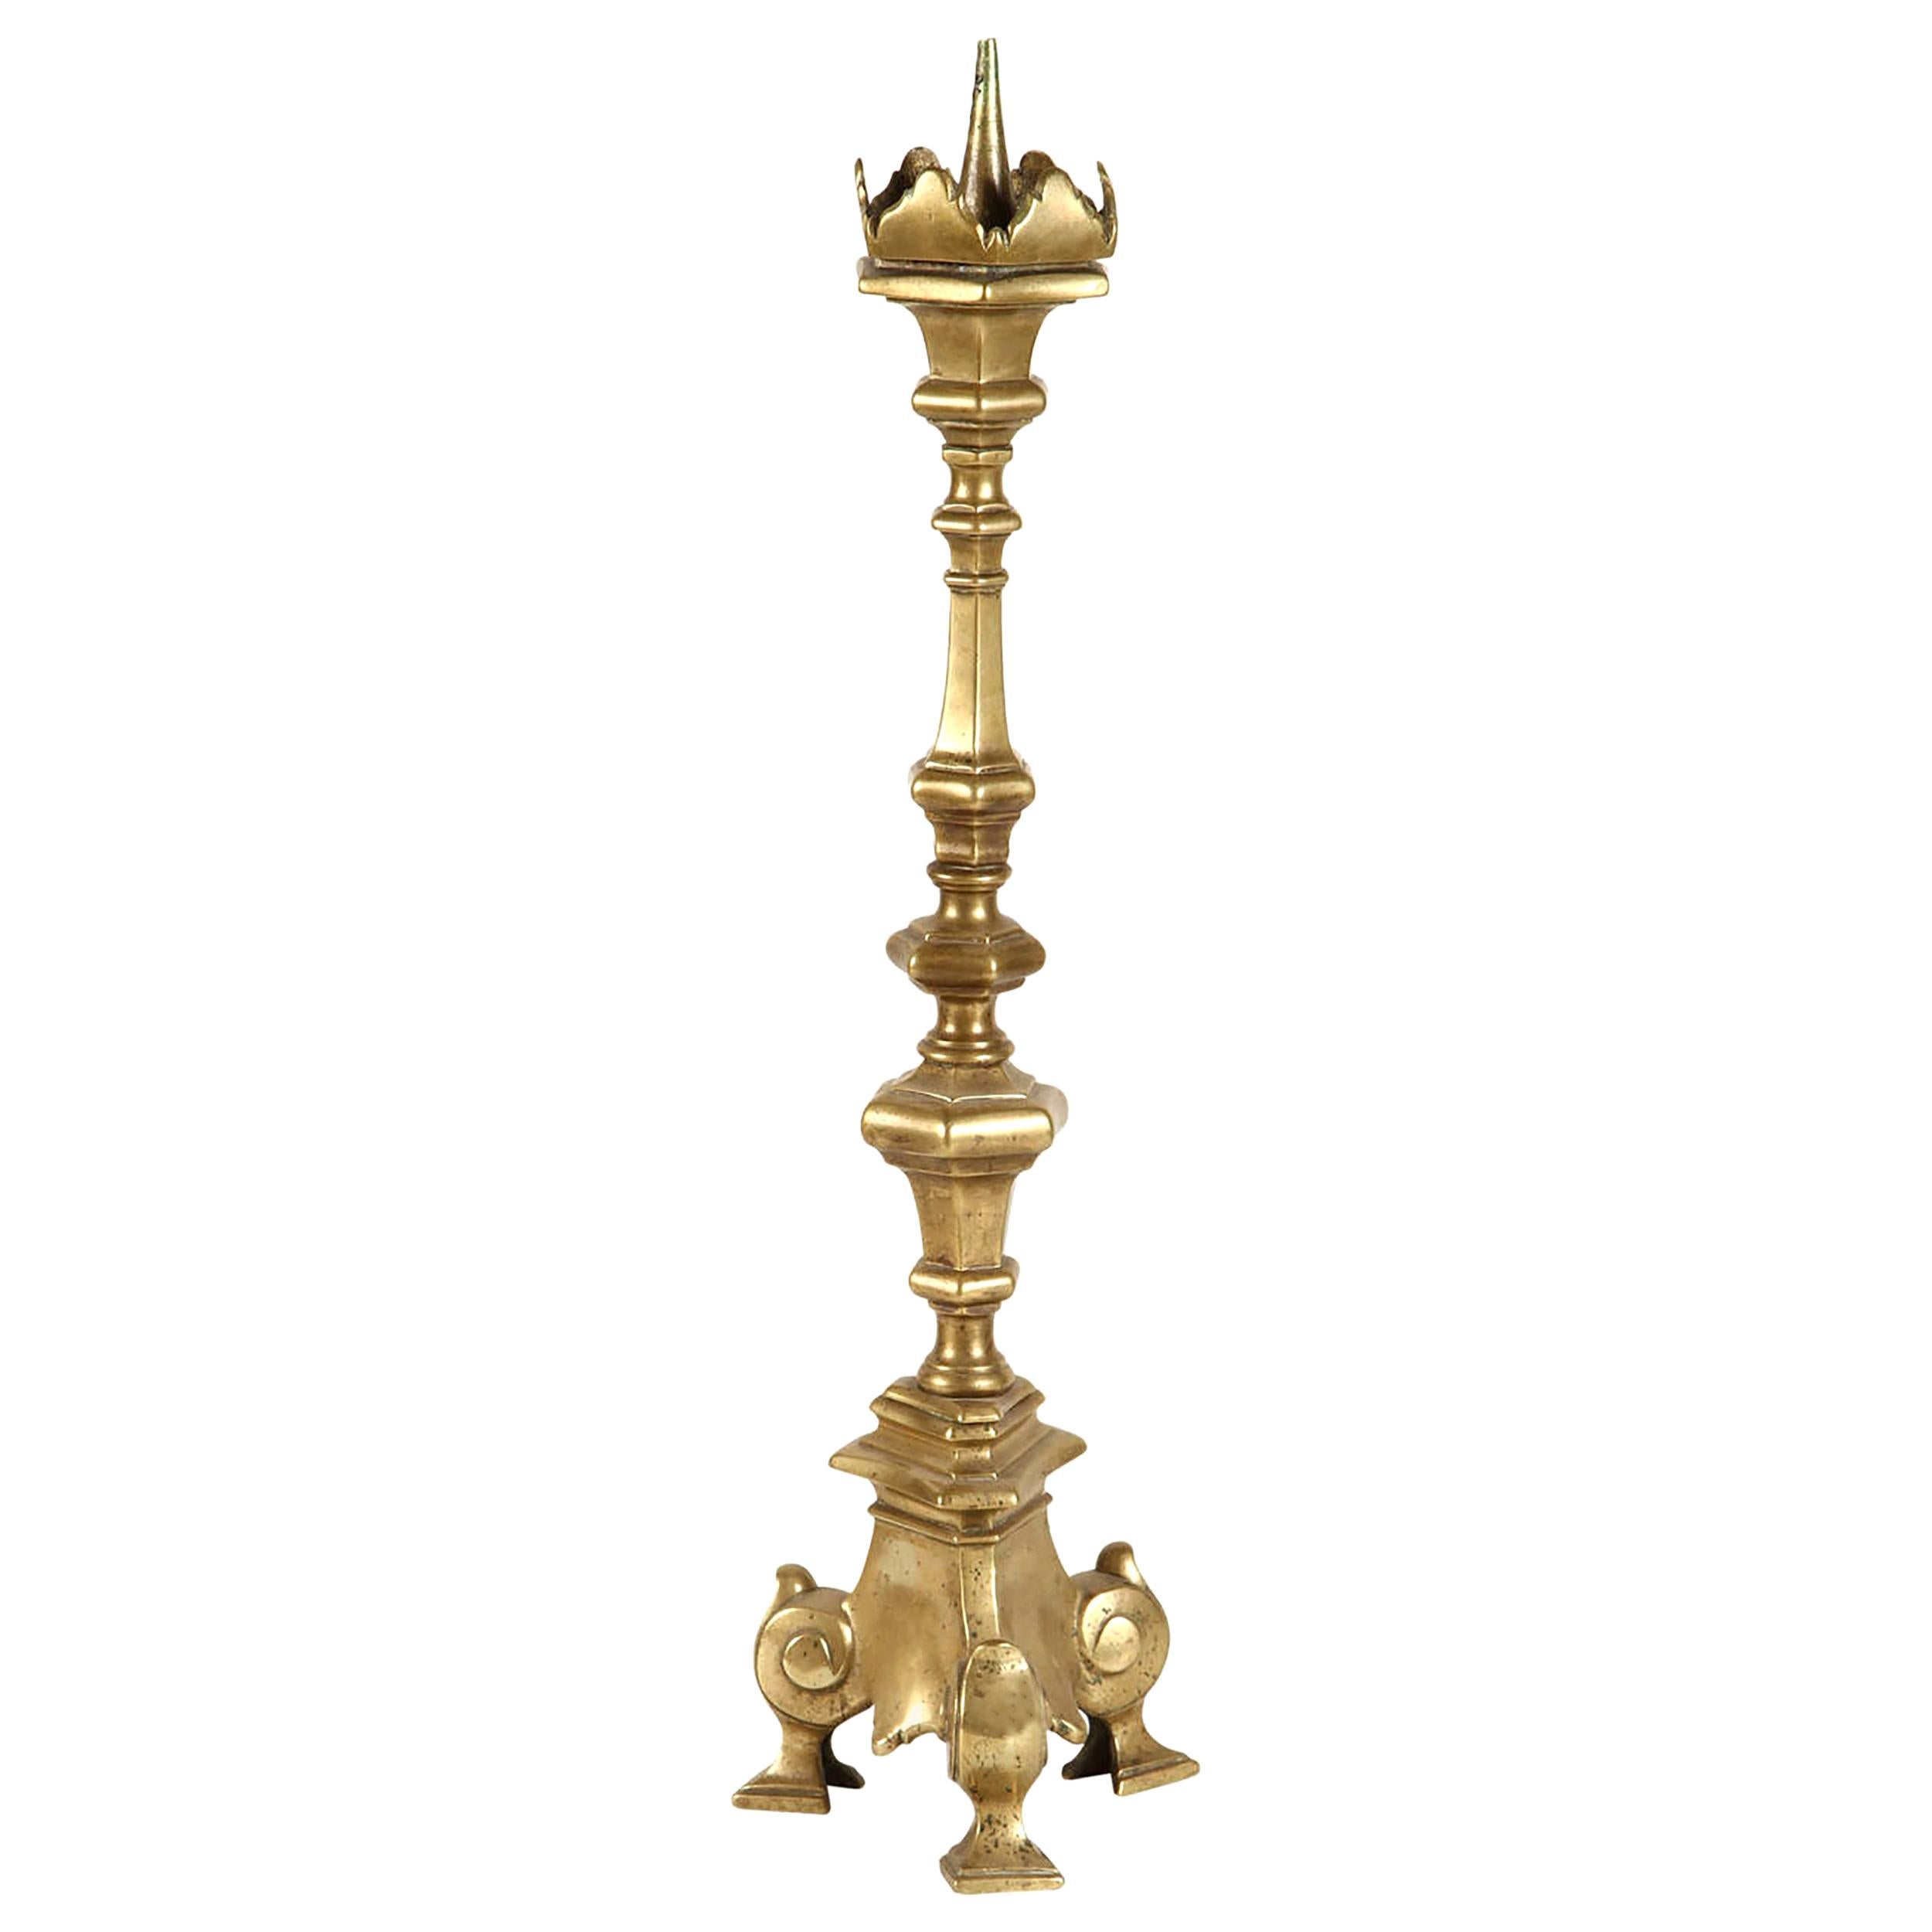 18th Century Italian Baroque Pricket Candlestick